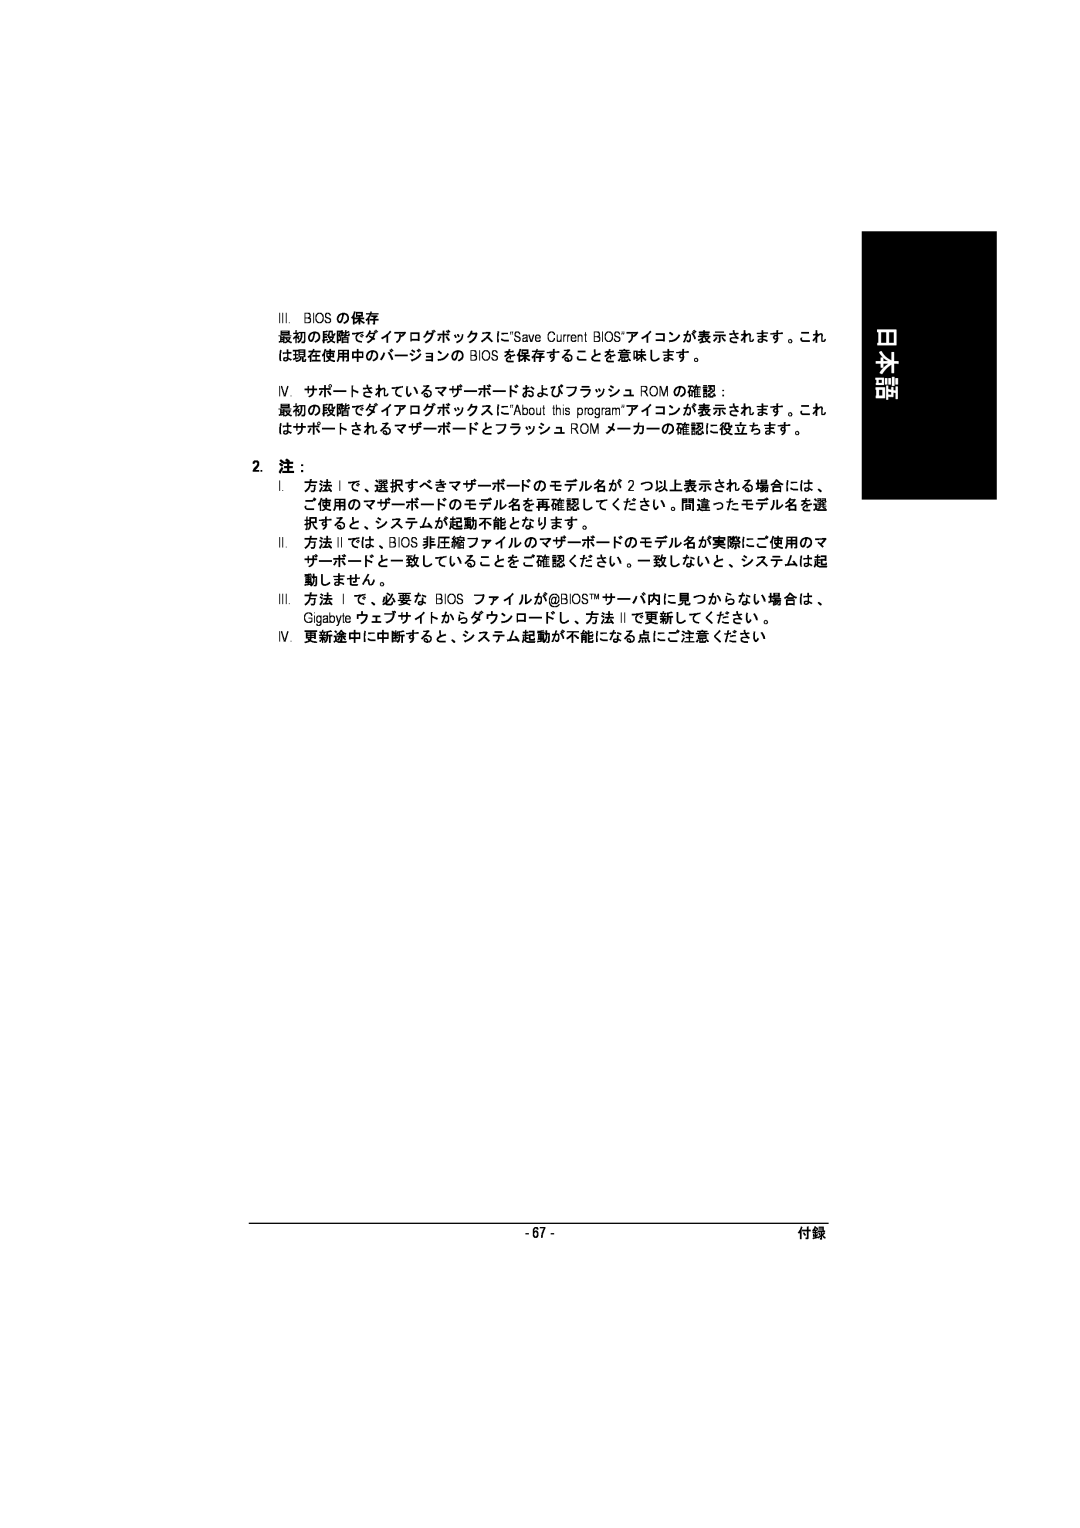 Intel GA-8I915P manual 2. 注 ：, Iii. Bios の保存 